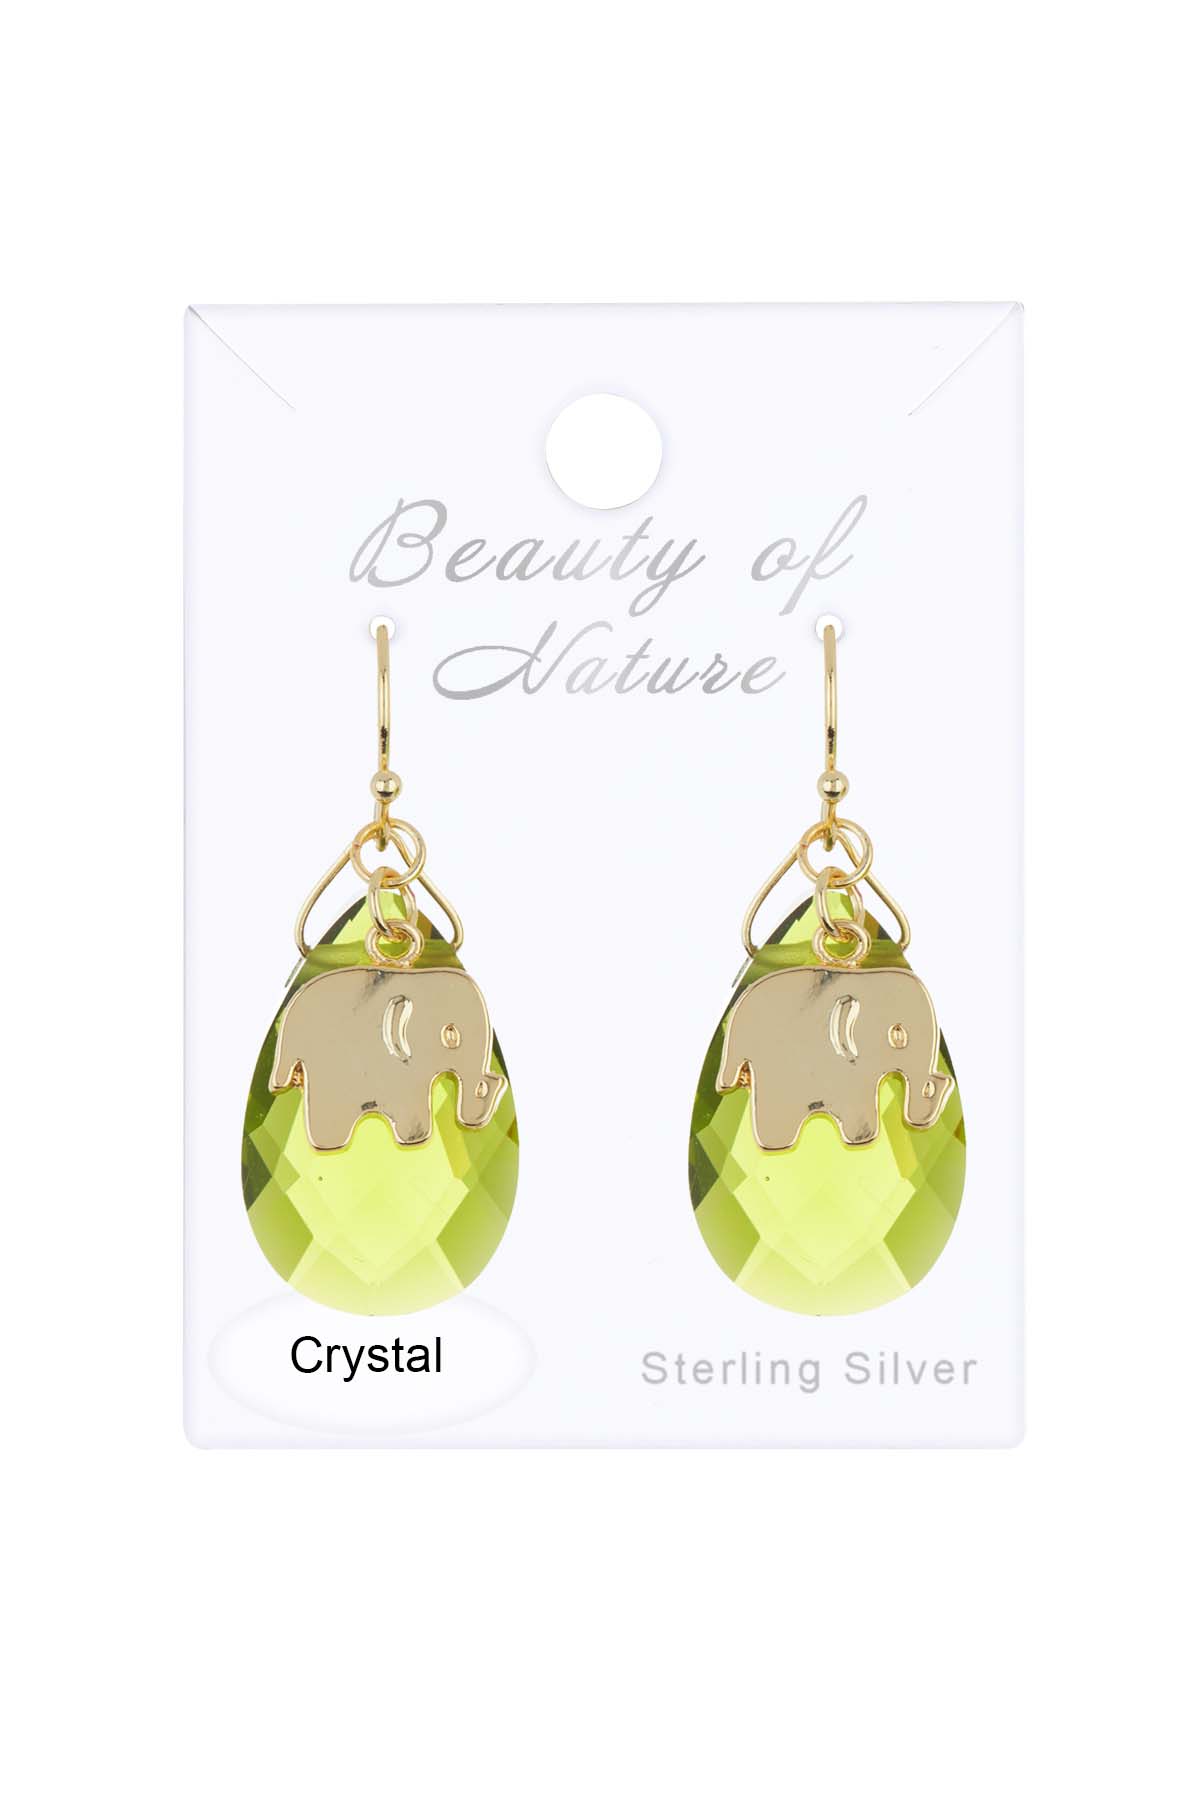 Peridot Crystal Elephant Earrings - GF